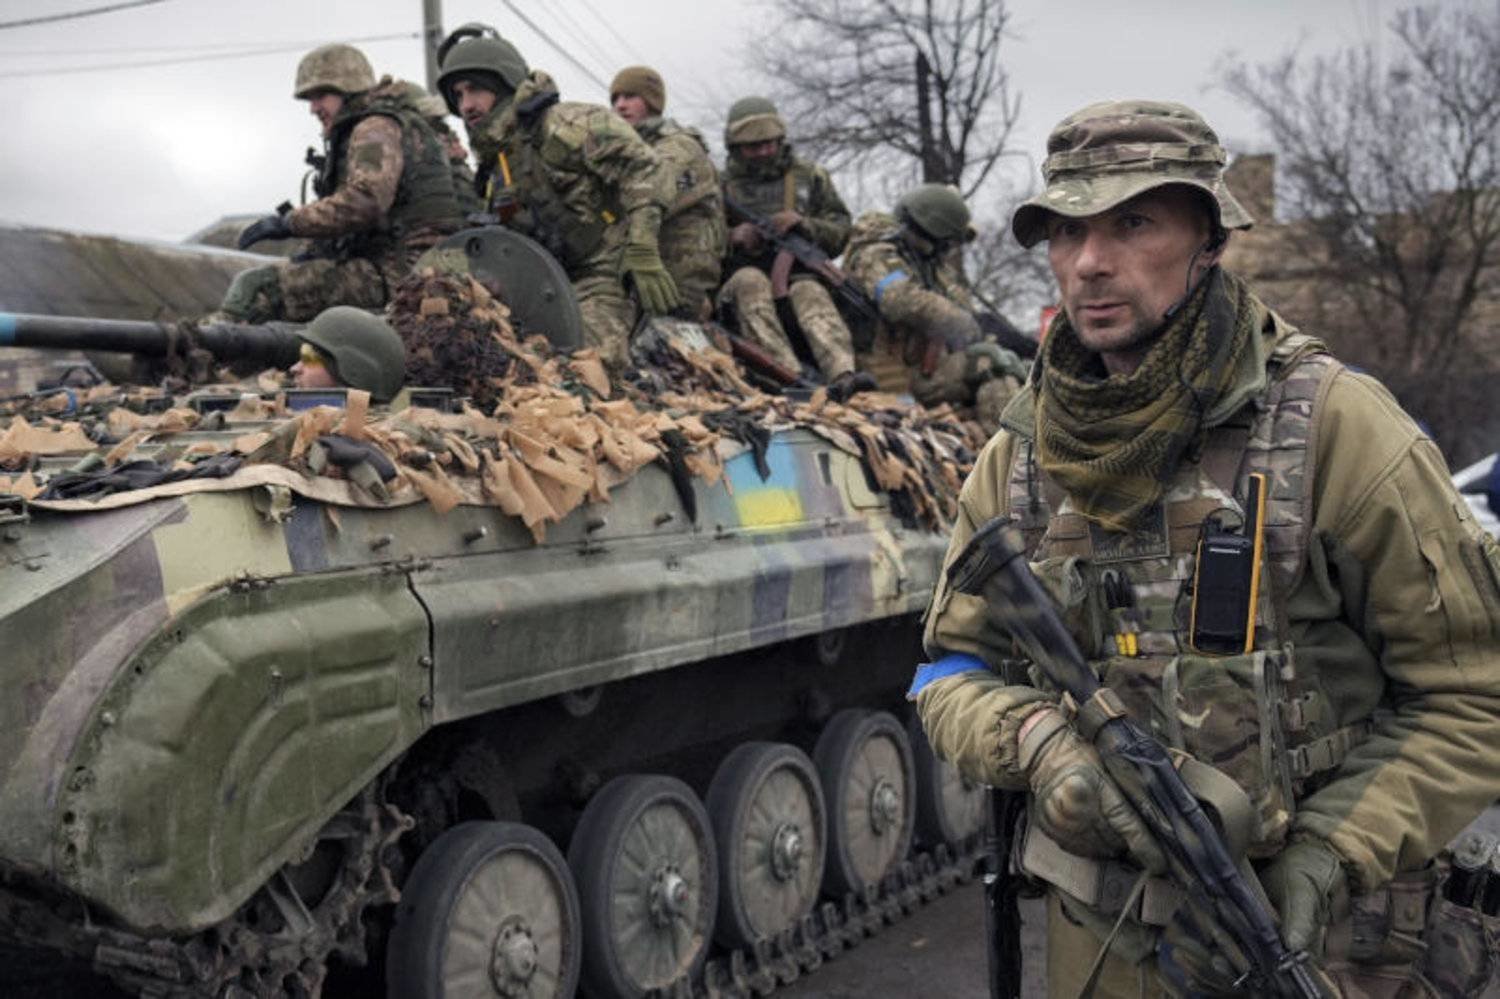 Ukrainian Soldiers Face Russian Advancements Toward Avdiivka (credits: Asharq Al Awsat)